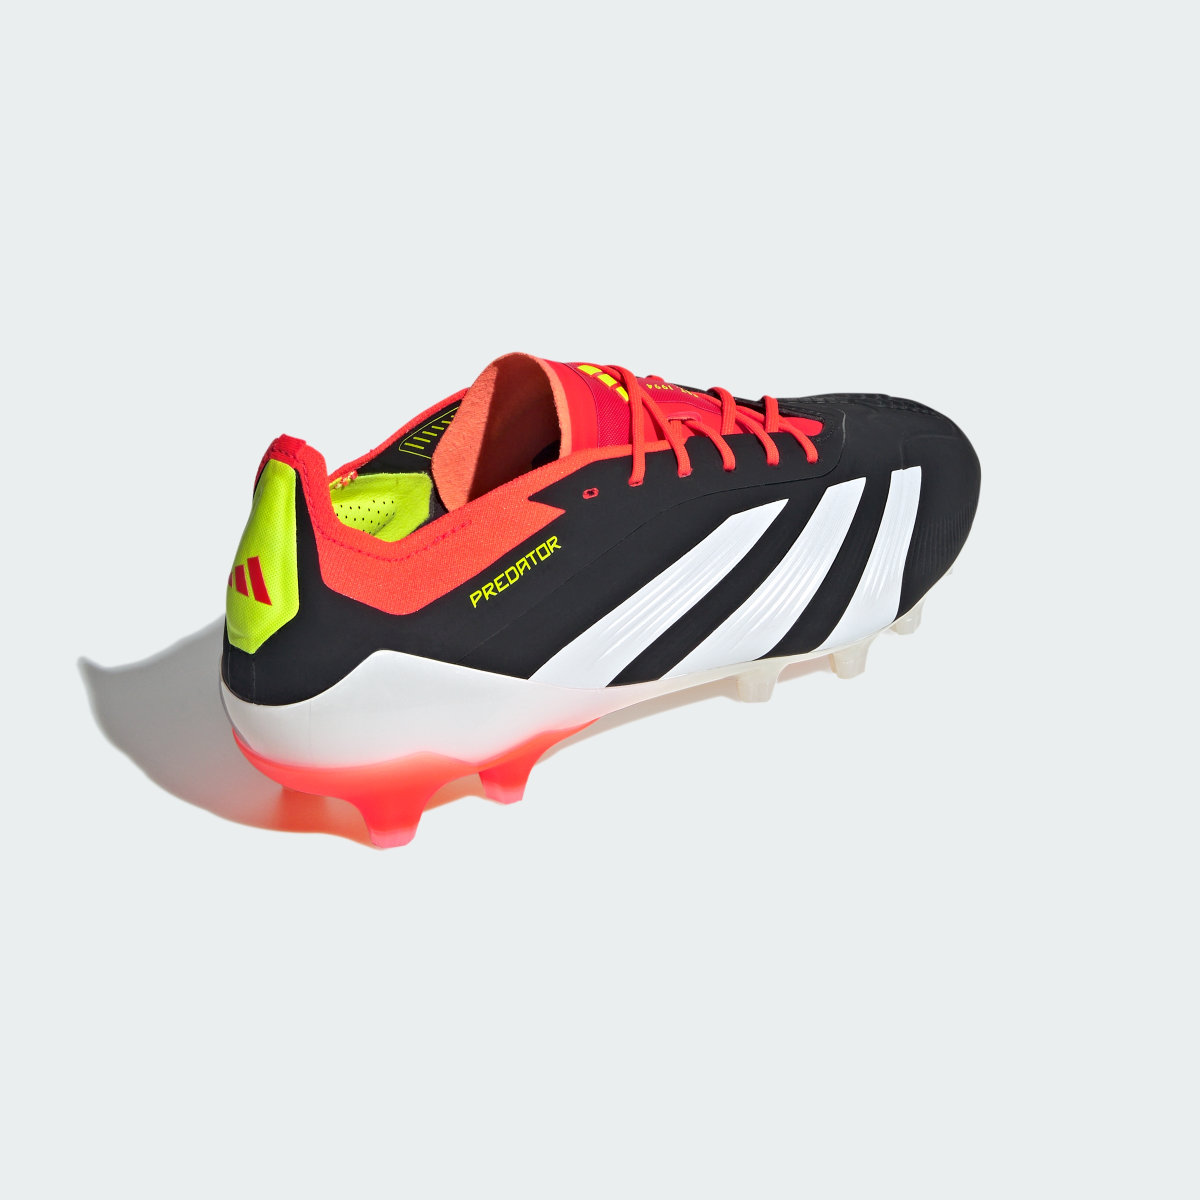 Adidas Predator Elite Artificial Grass Football Boots. 9